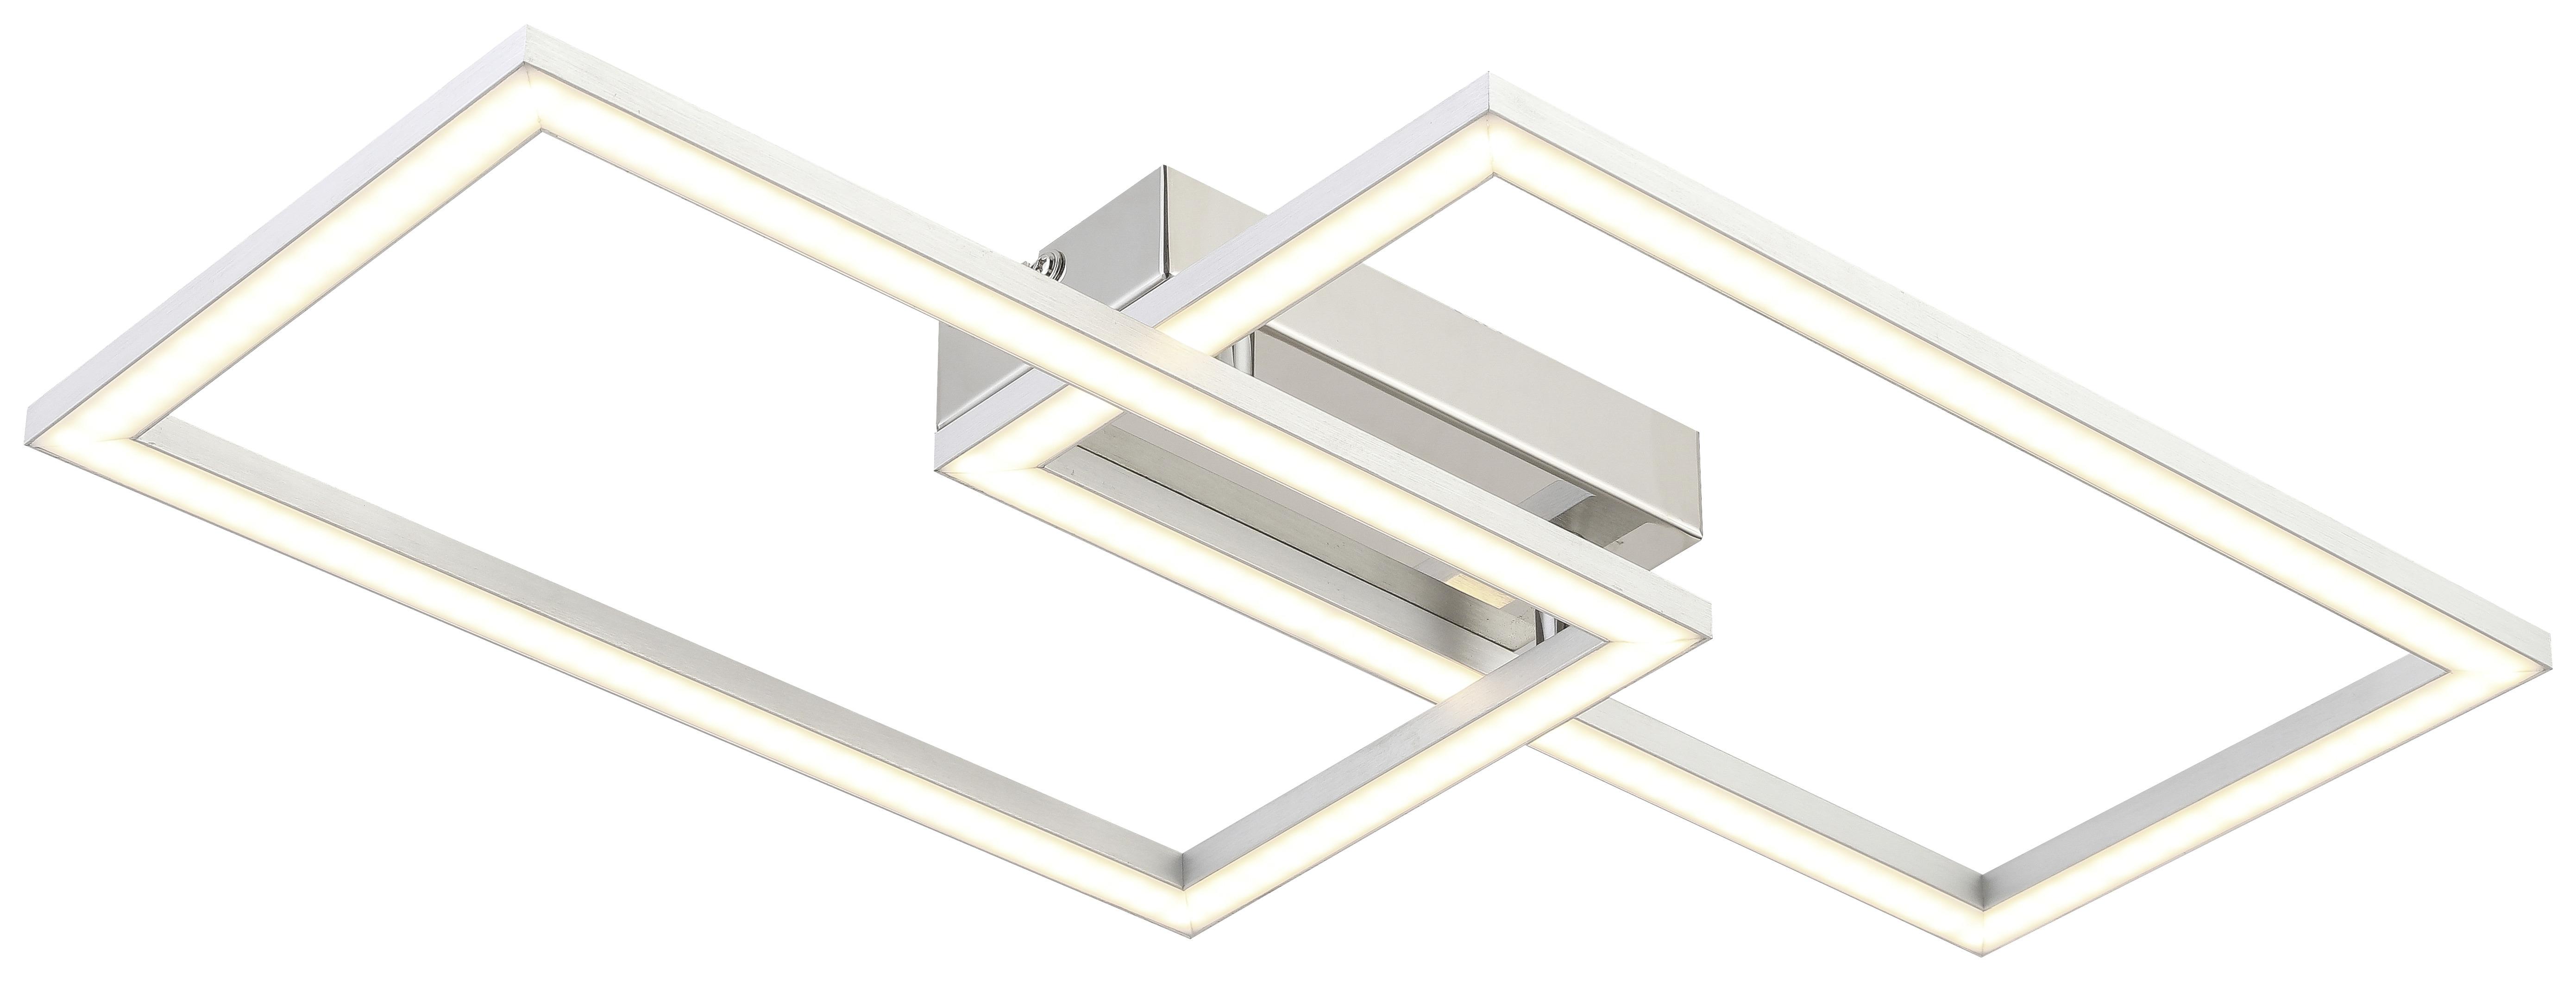 LED-Deckenleuchte Tracy - Alufarben, MODERN, Kunststoff/Metall (50/28/6cm) - Luca Bessoni